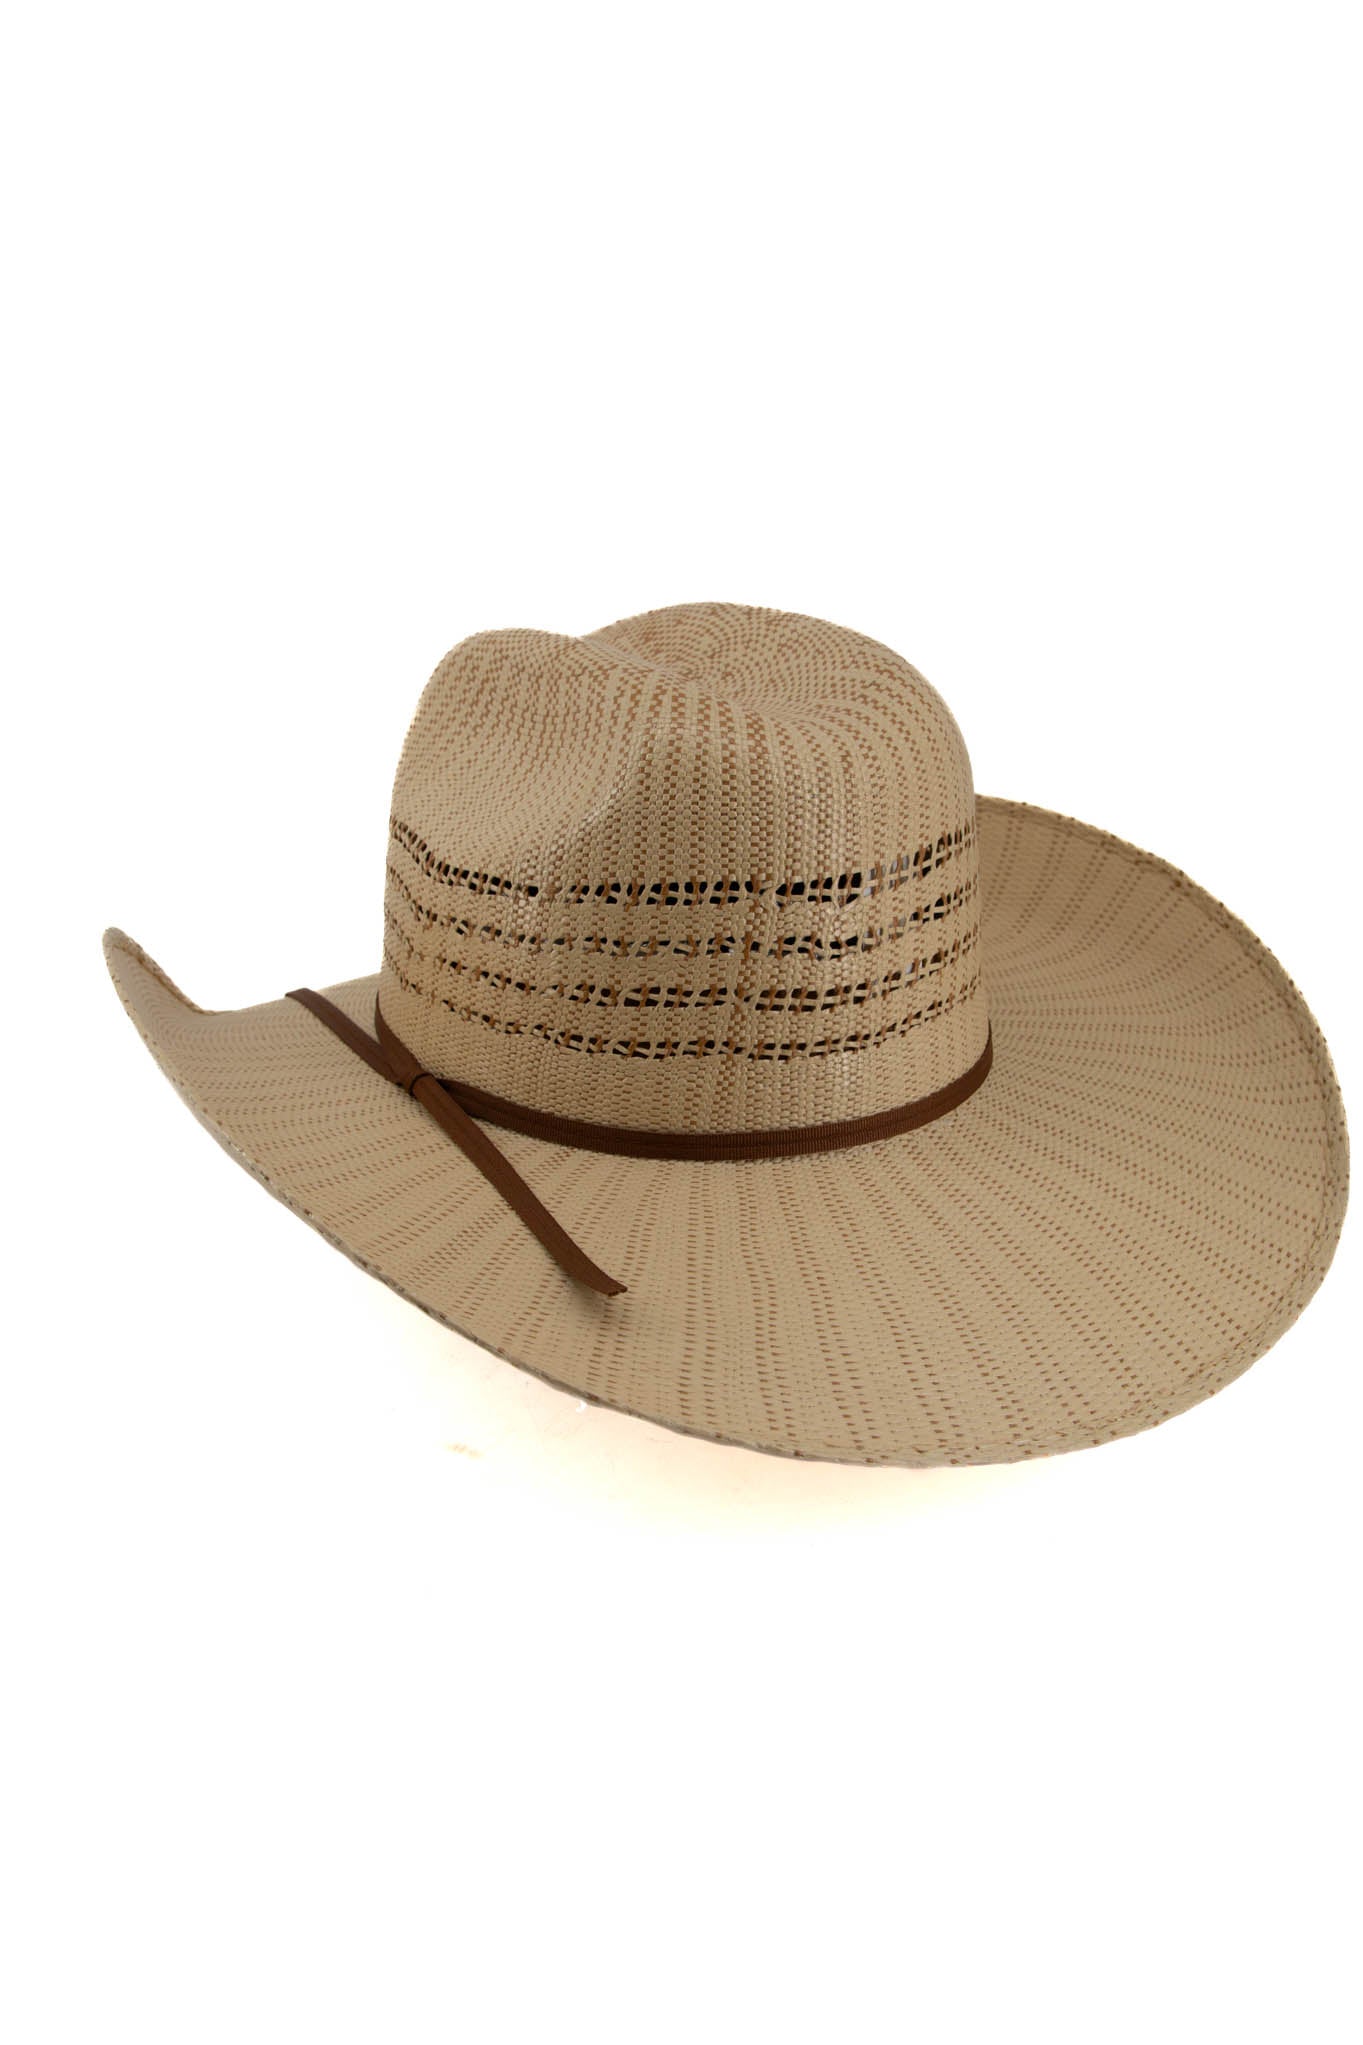 Apodaca Malboro 10X Straw Hat